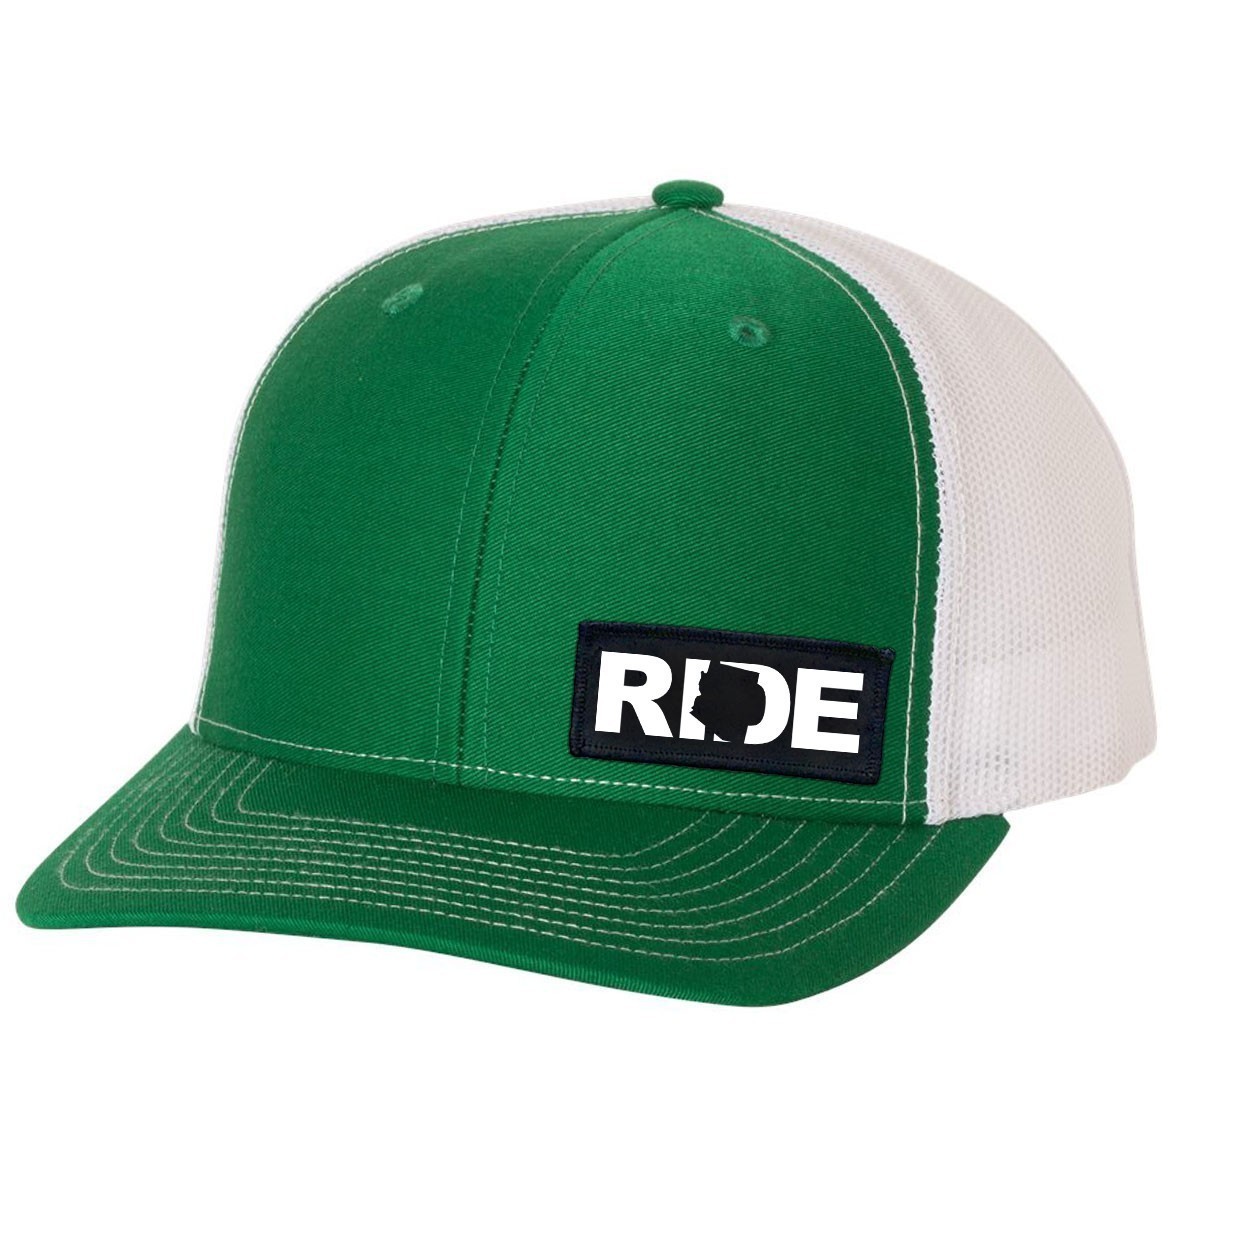 Ride Arizona Night Out Woven Patch Snapback Trucker Hat Green/White (White Logo)